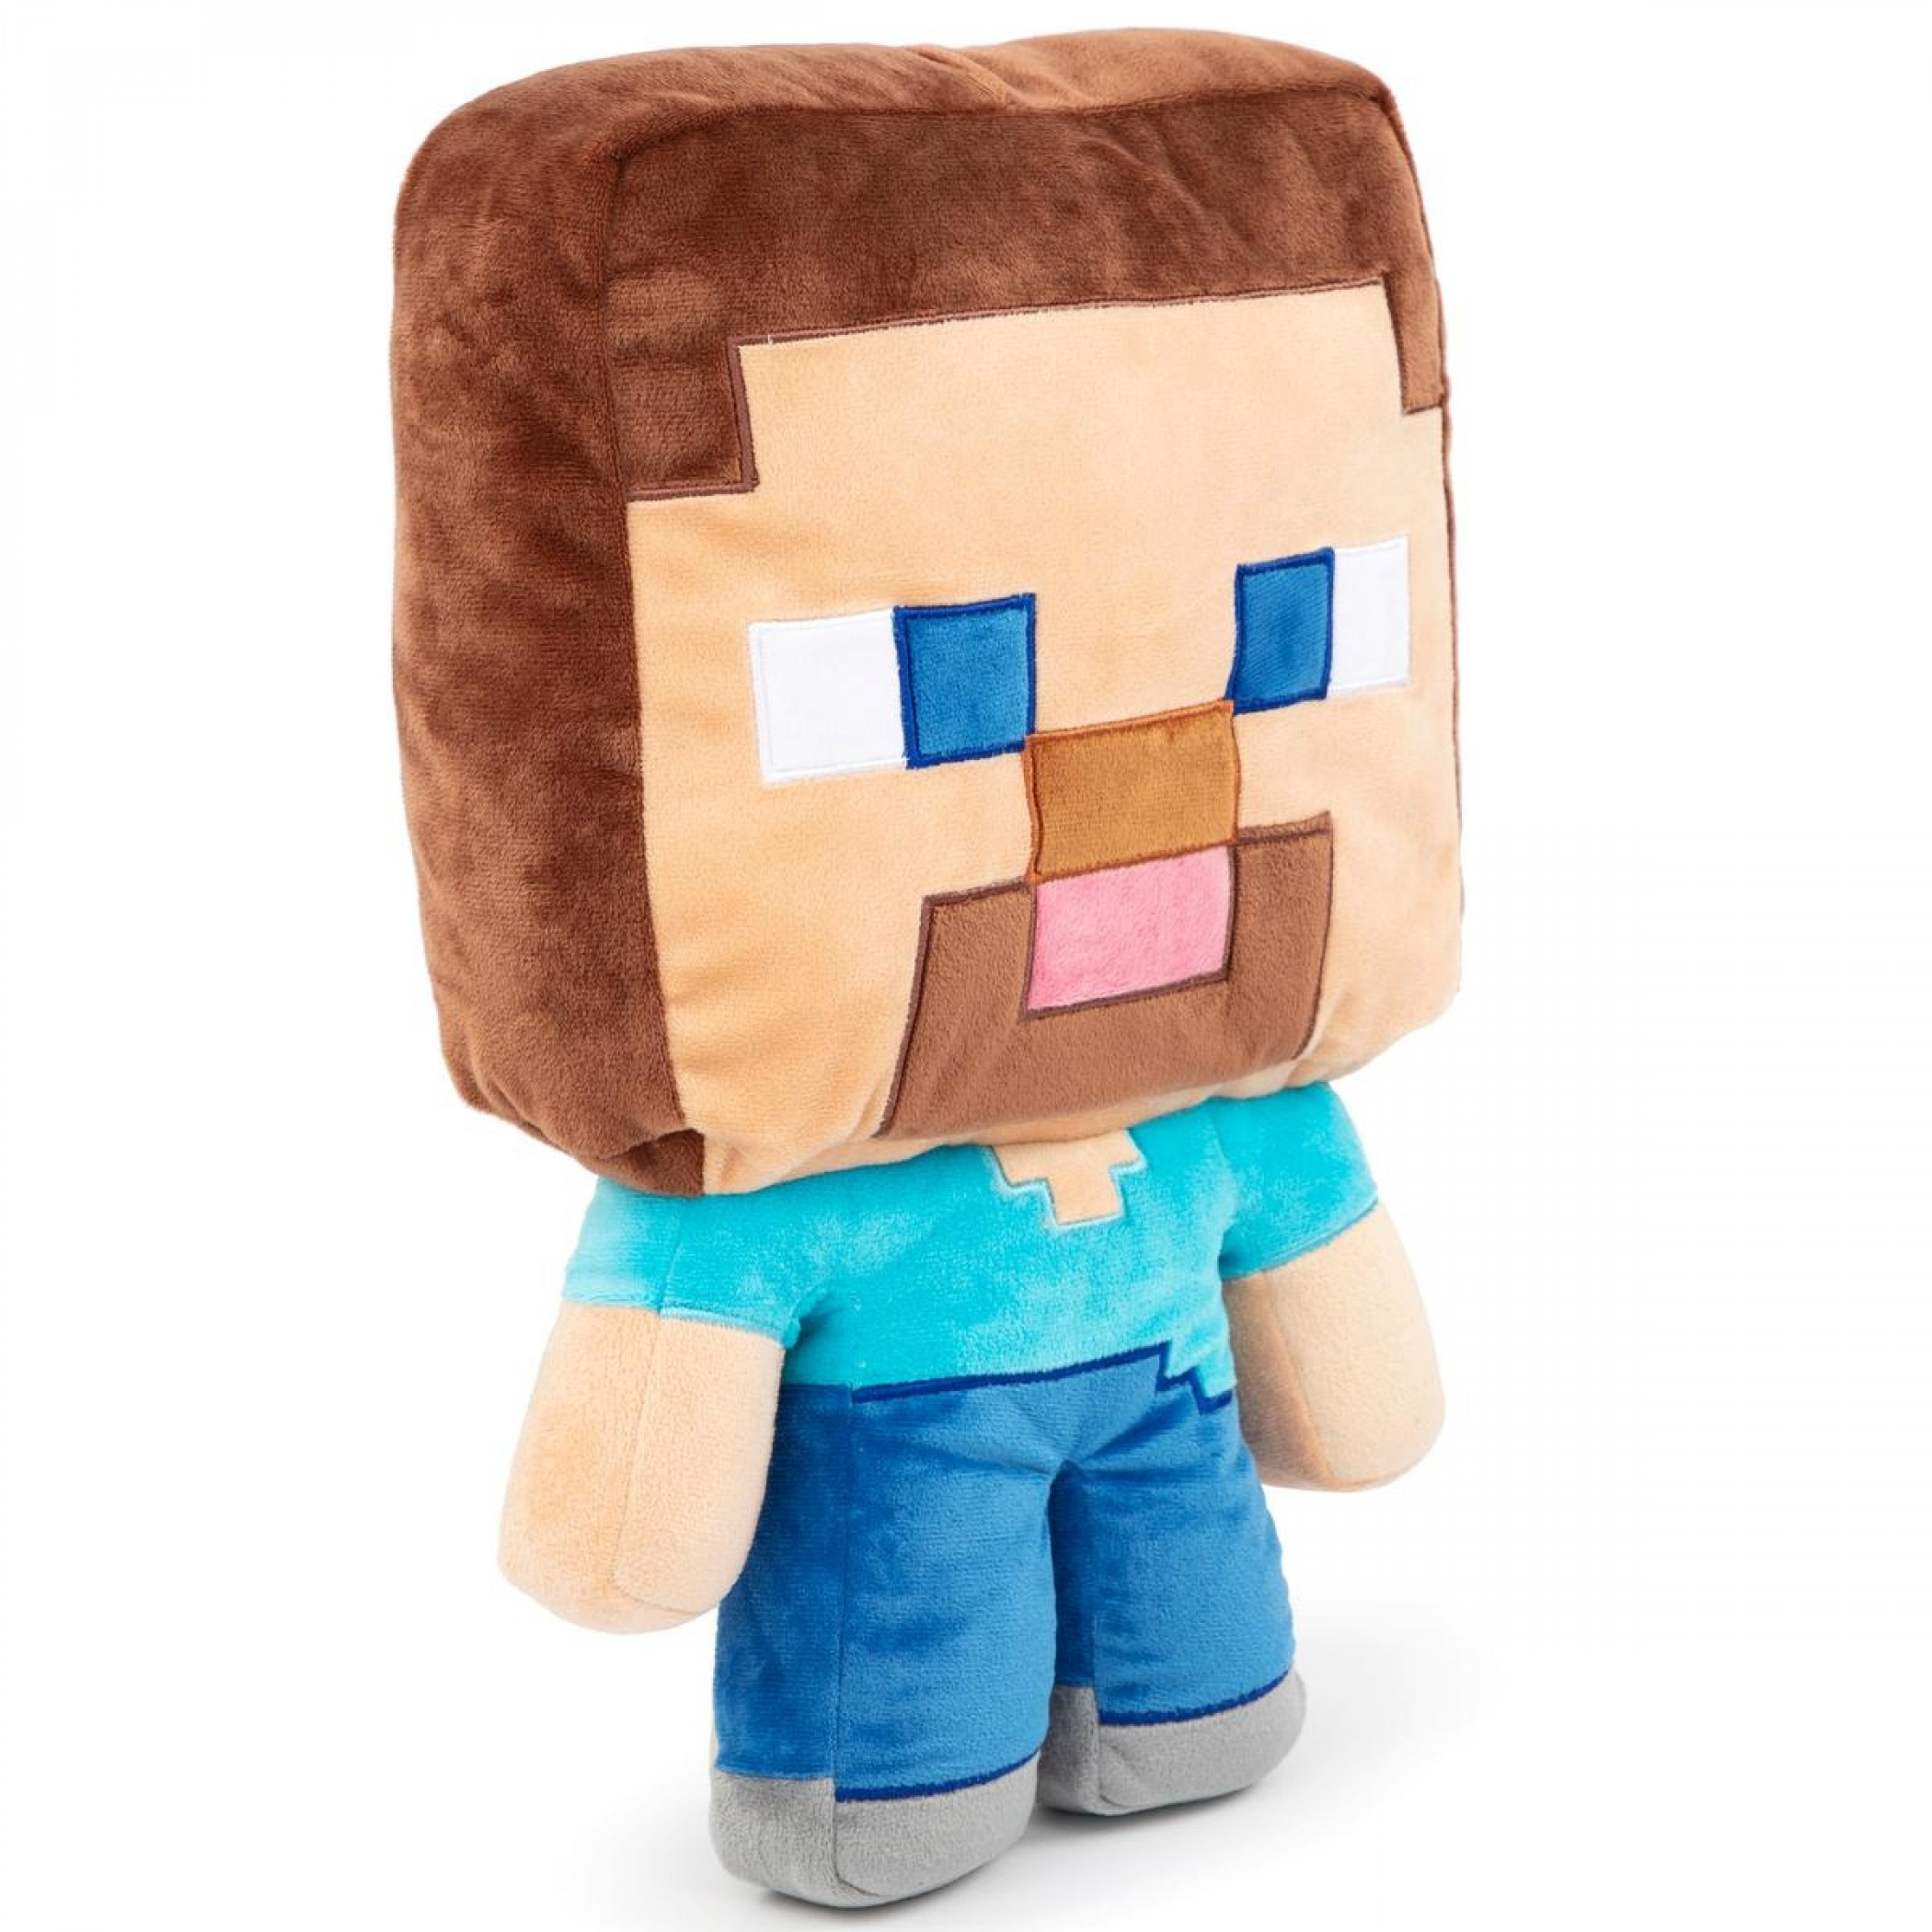 Minecraft Steve Plush Stuffed Pillow Buddy